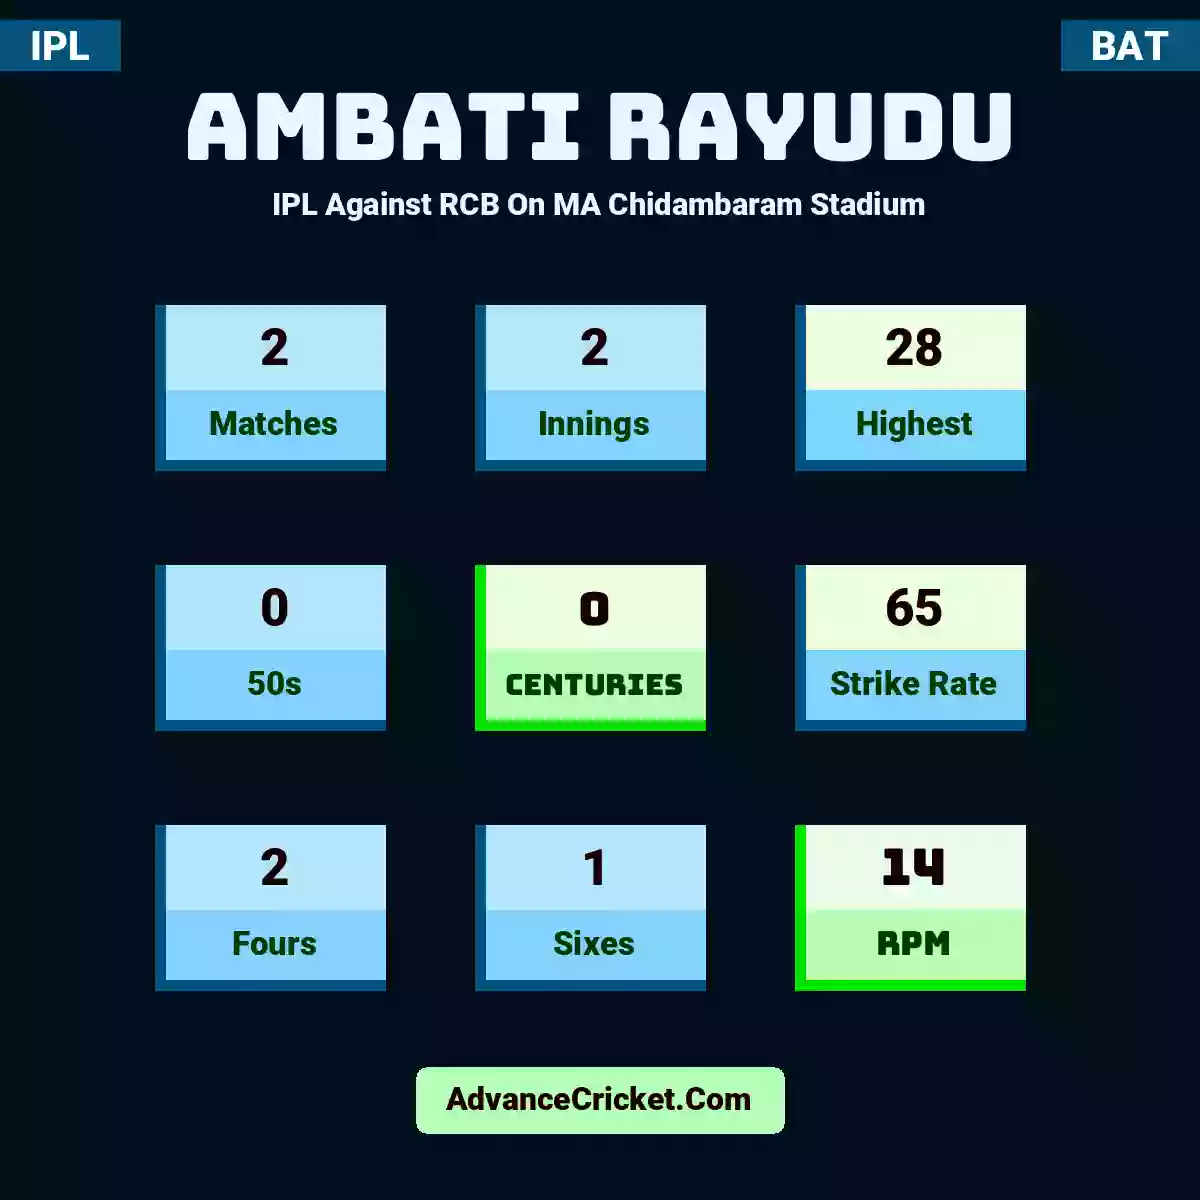 Ambati Rayudu IPL  Against RCB On MA Chidambaram Stadium, Ambati Rayudu played 2 matches, scored 28 runs as highest, 0 half-centuries, and 0 centuries, with a strike rate of 65. A.Rayudu hit 2 fours and 1 sixes, with an RPM of 14.